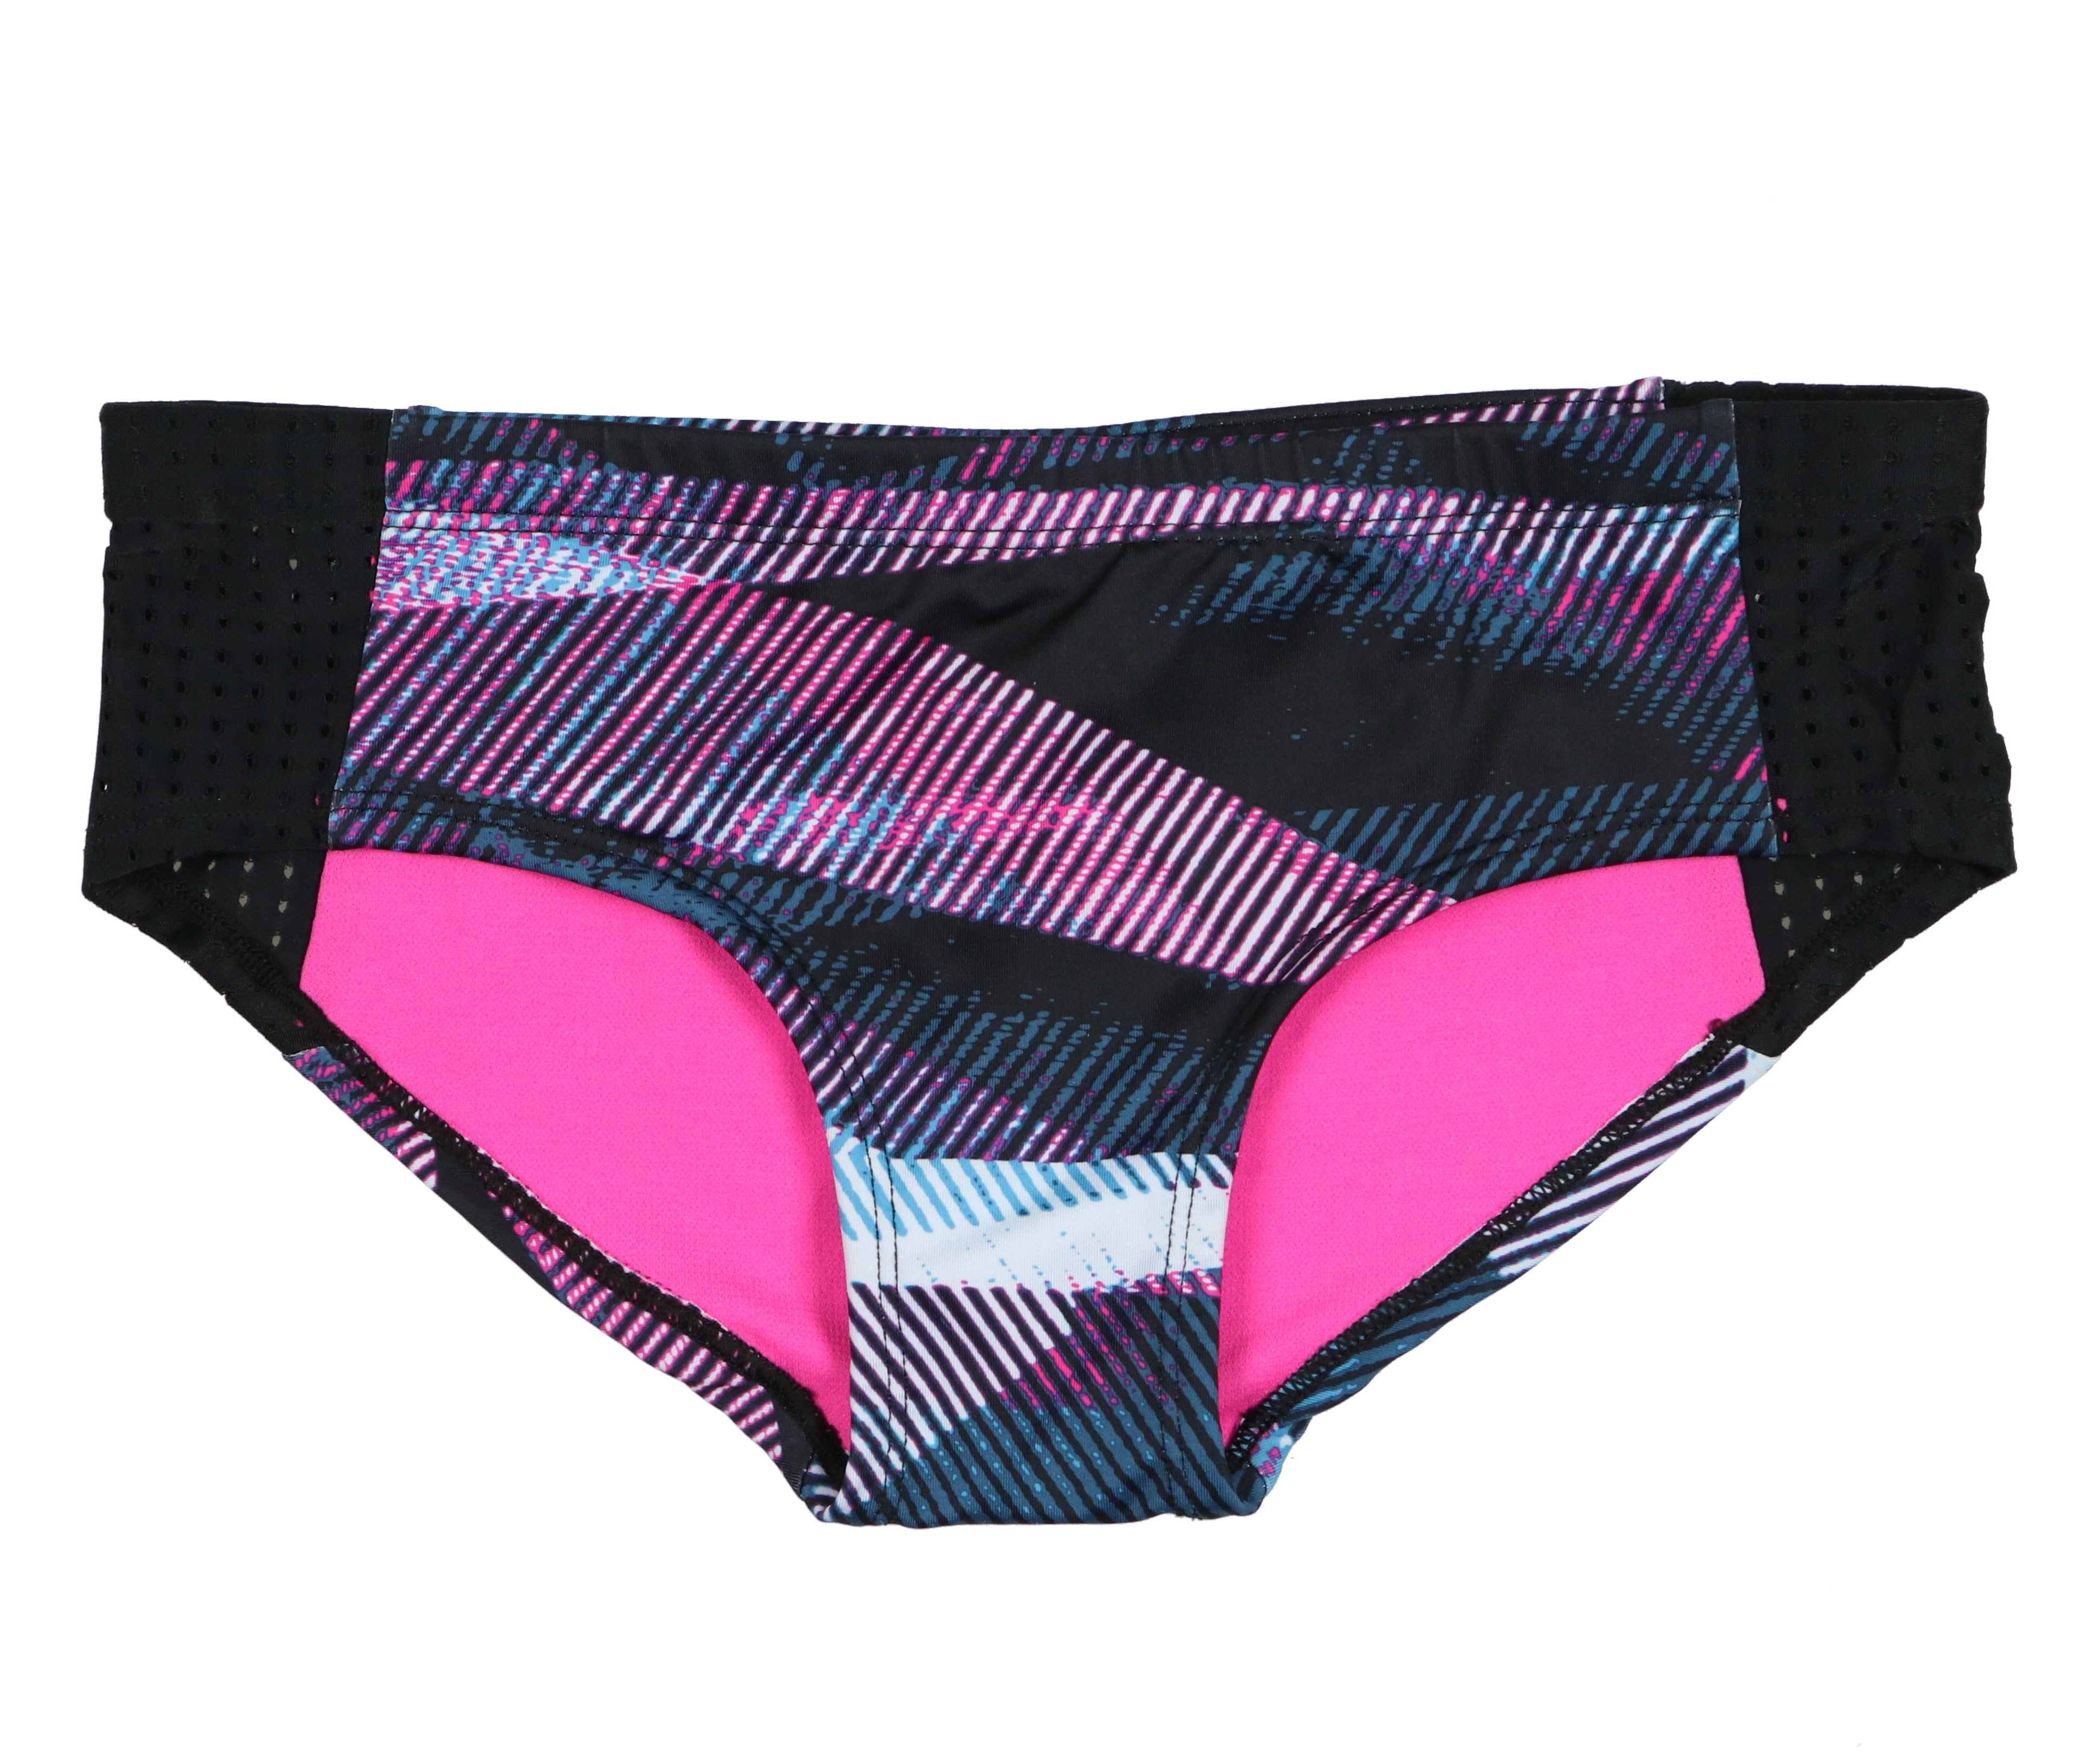 Nike Women's Line Up Printed Hipster Bikini Bottoms Laser Fuschia Pink Blue - image 3 of 4